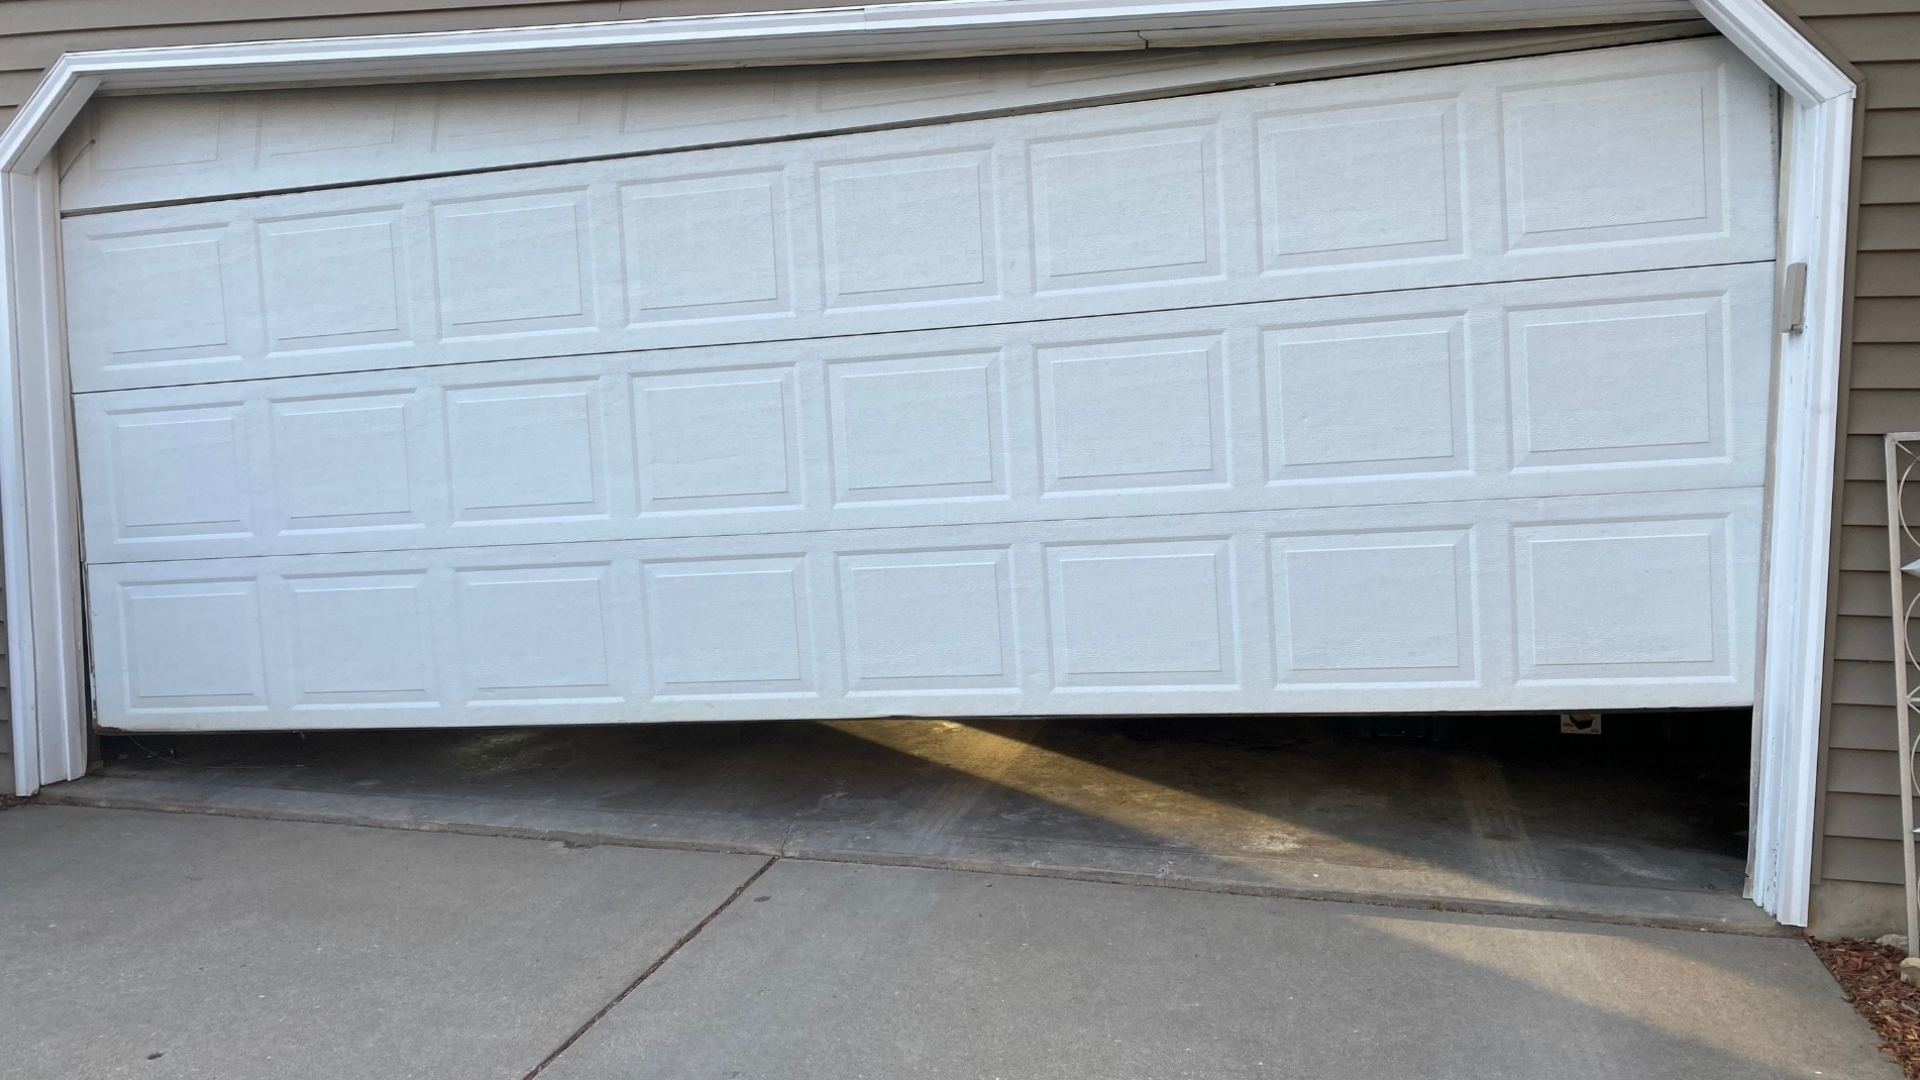 An off-balanced garage door